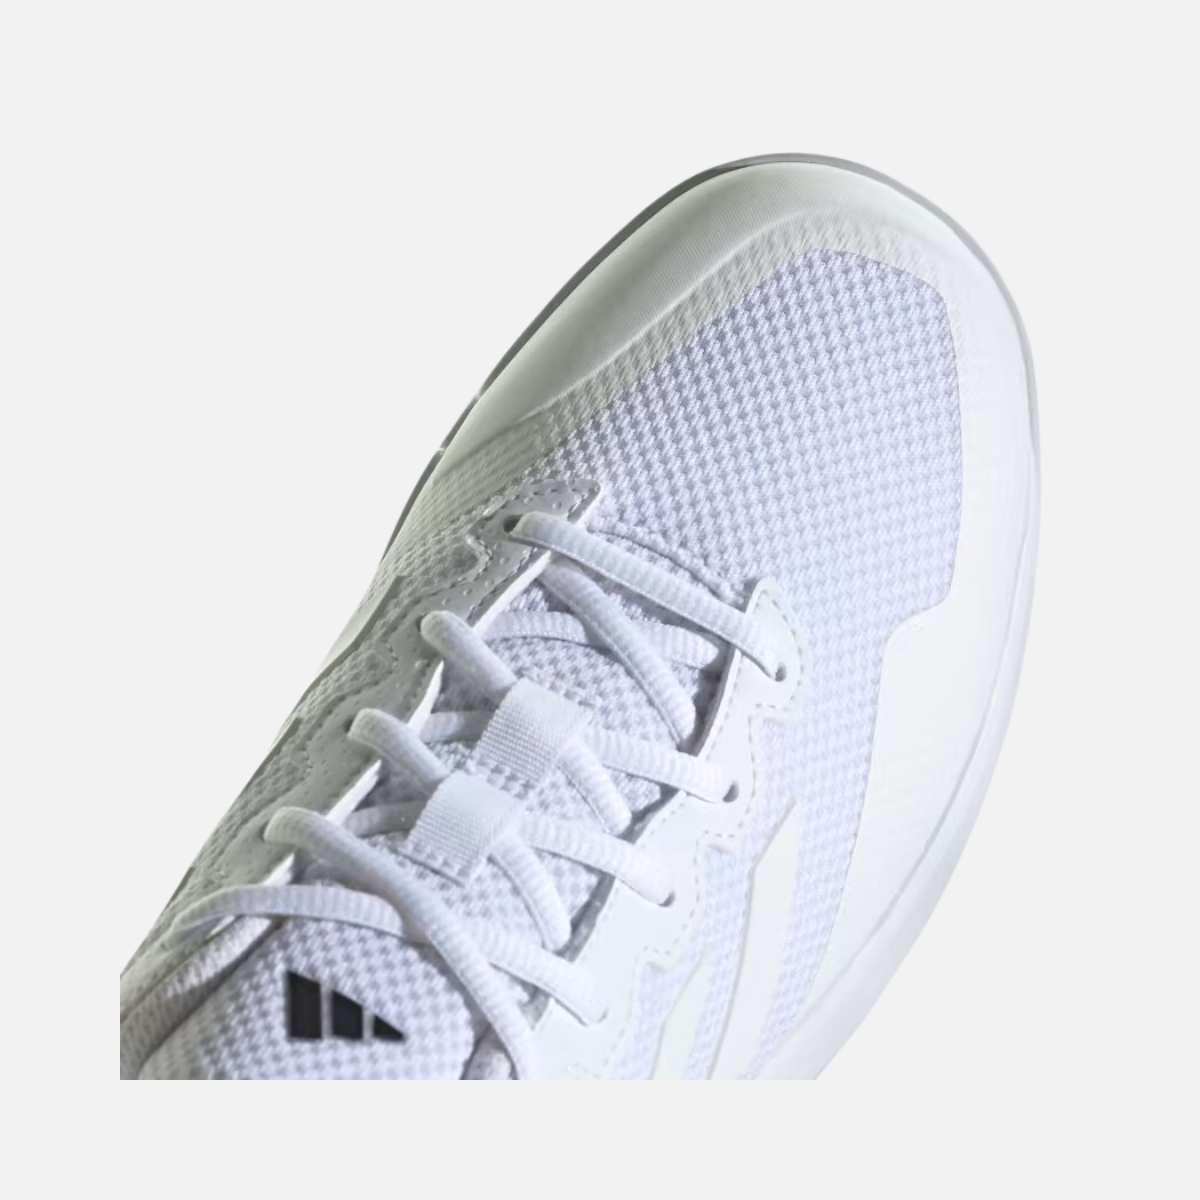 Adidas GAMECOURT 2.0 Tennis Shoes -Cloud White/Cloud White/Matte Silver